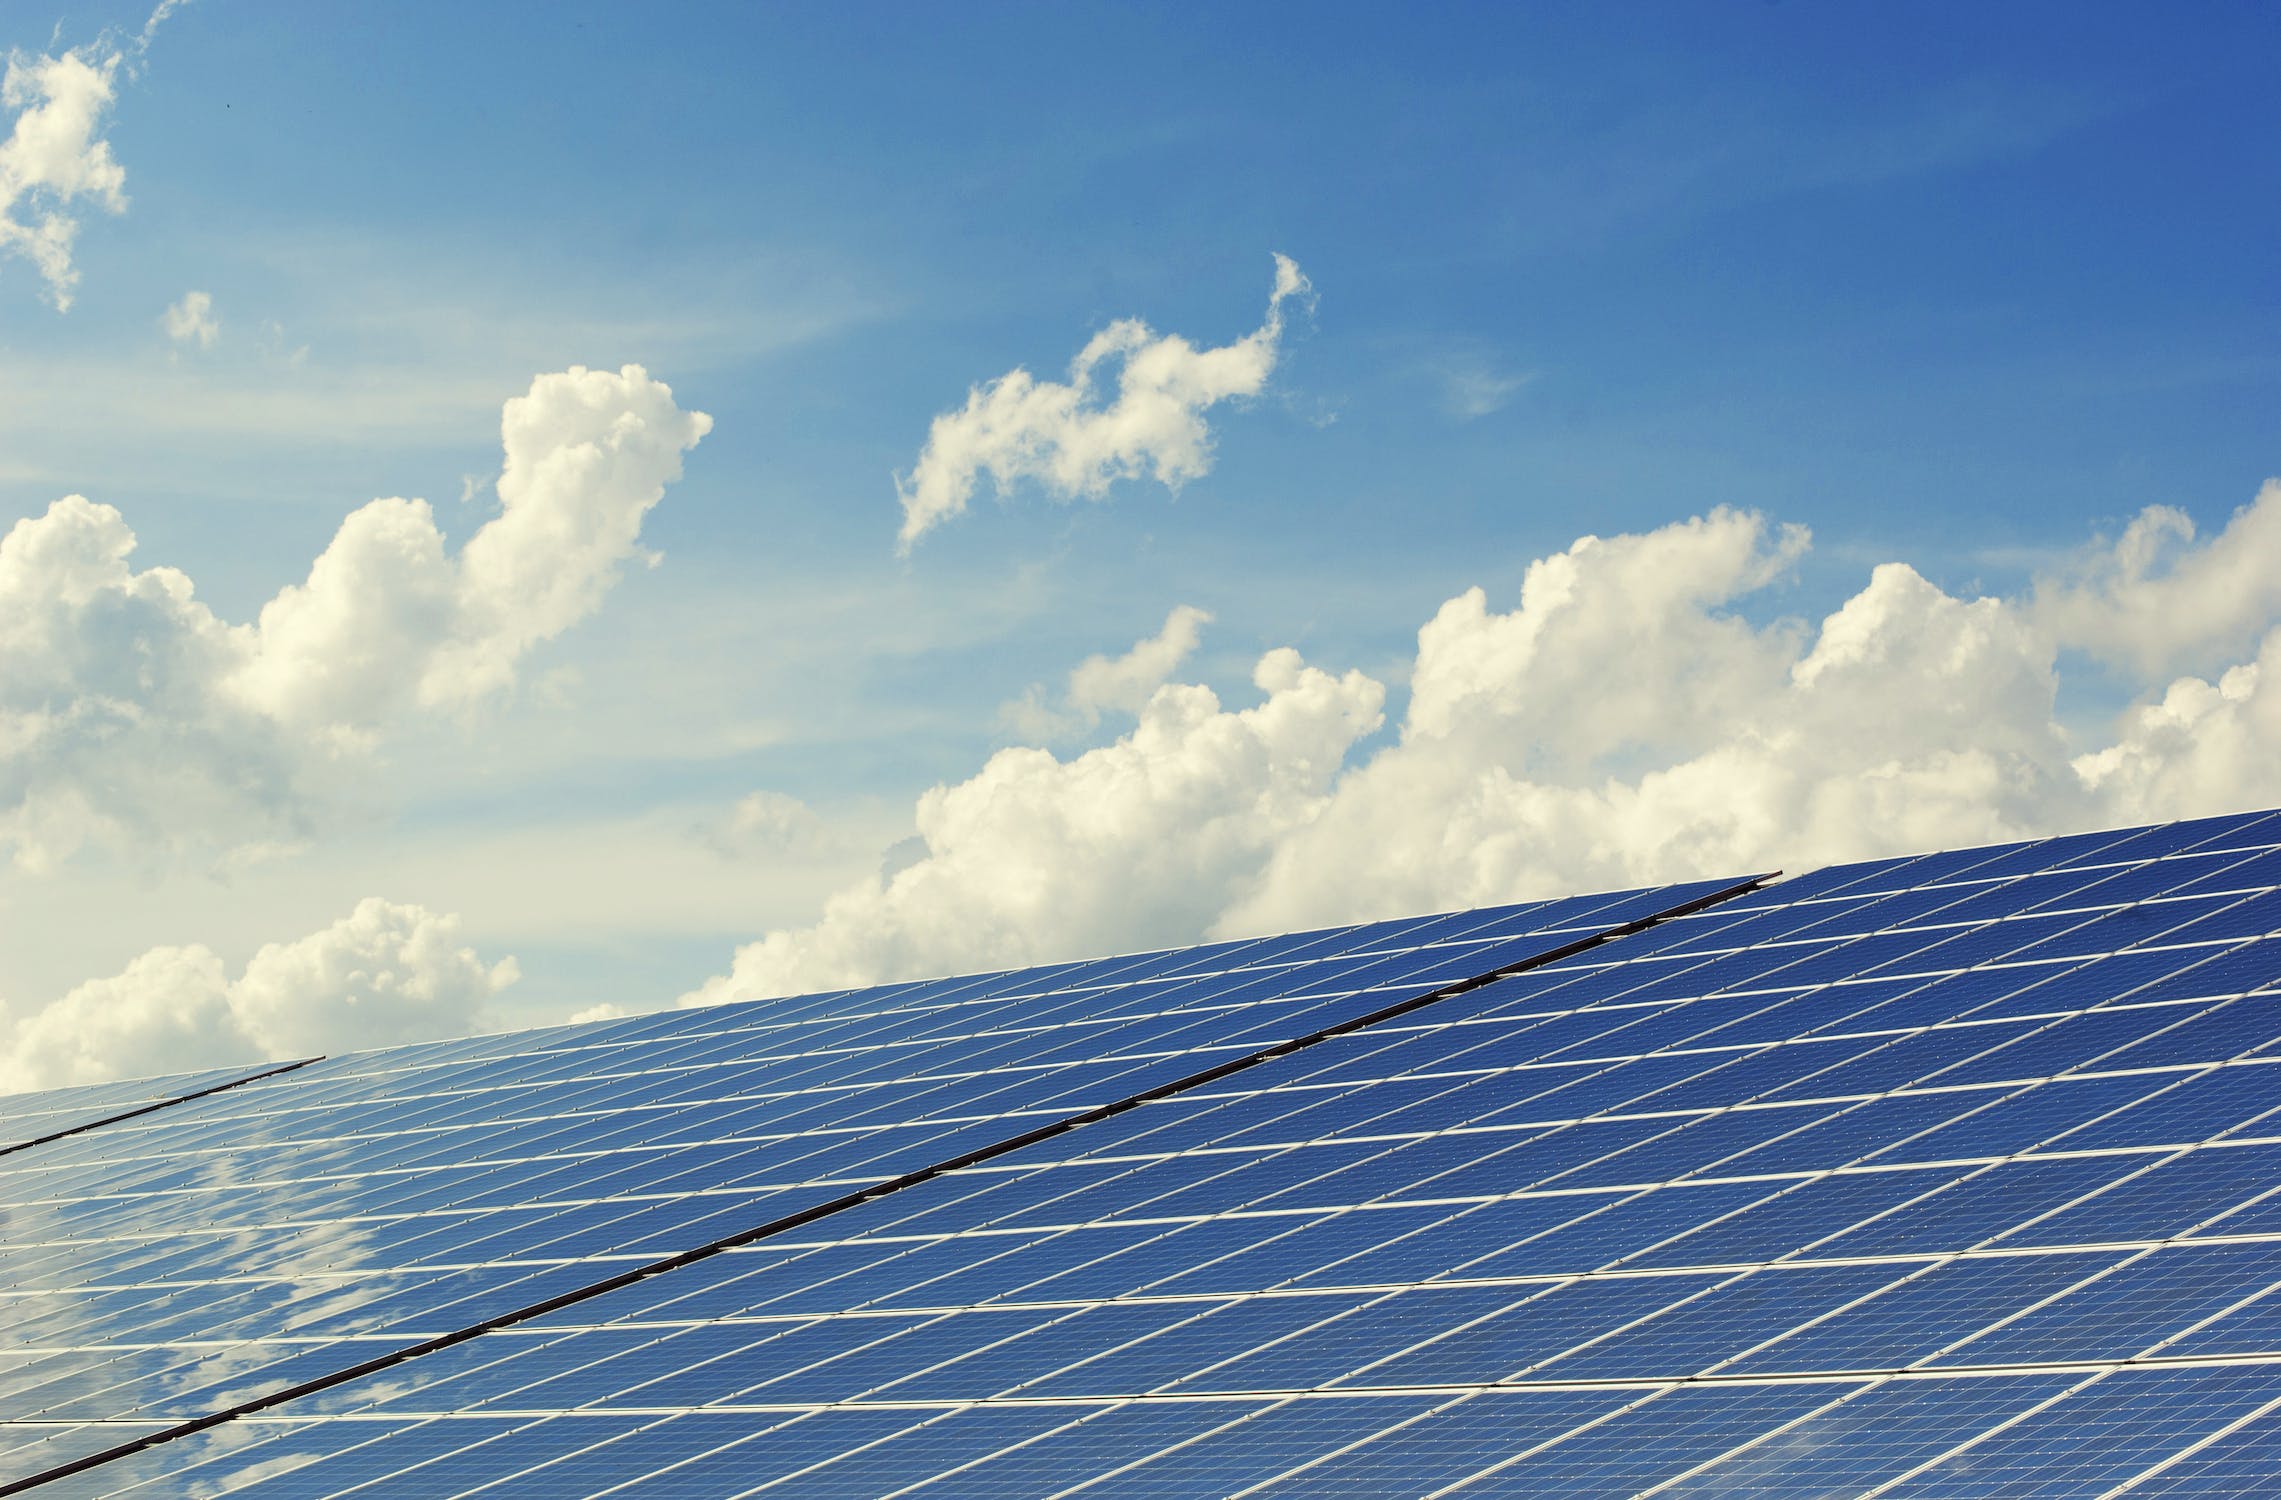 Benefits of Solar PV